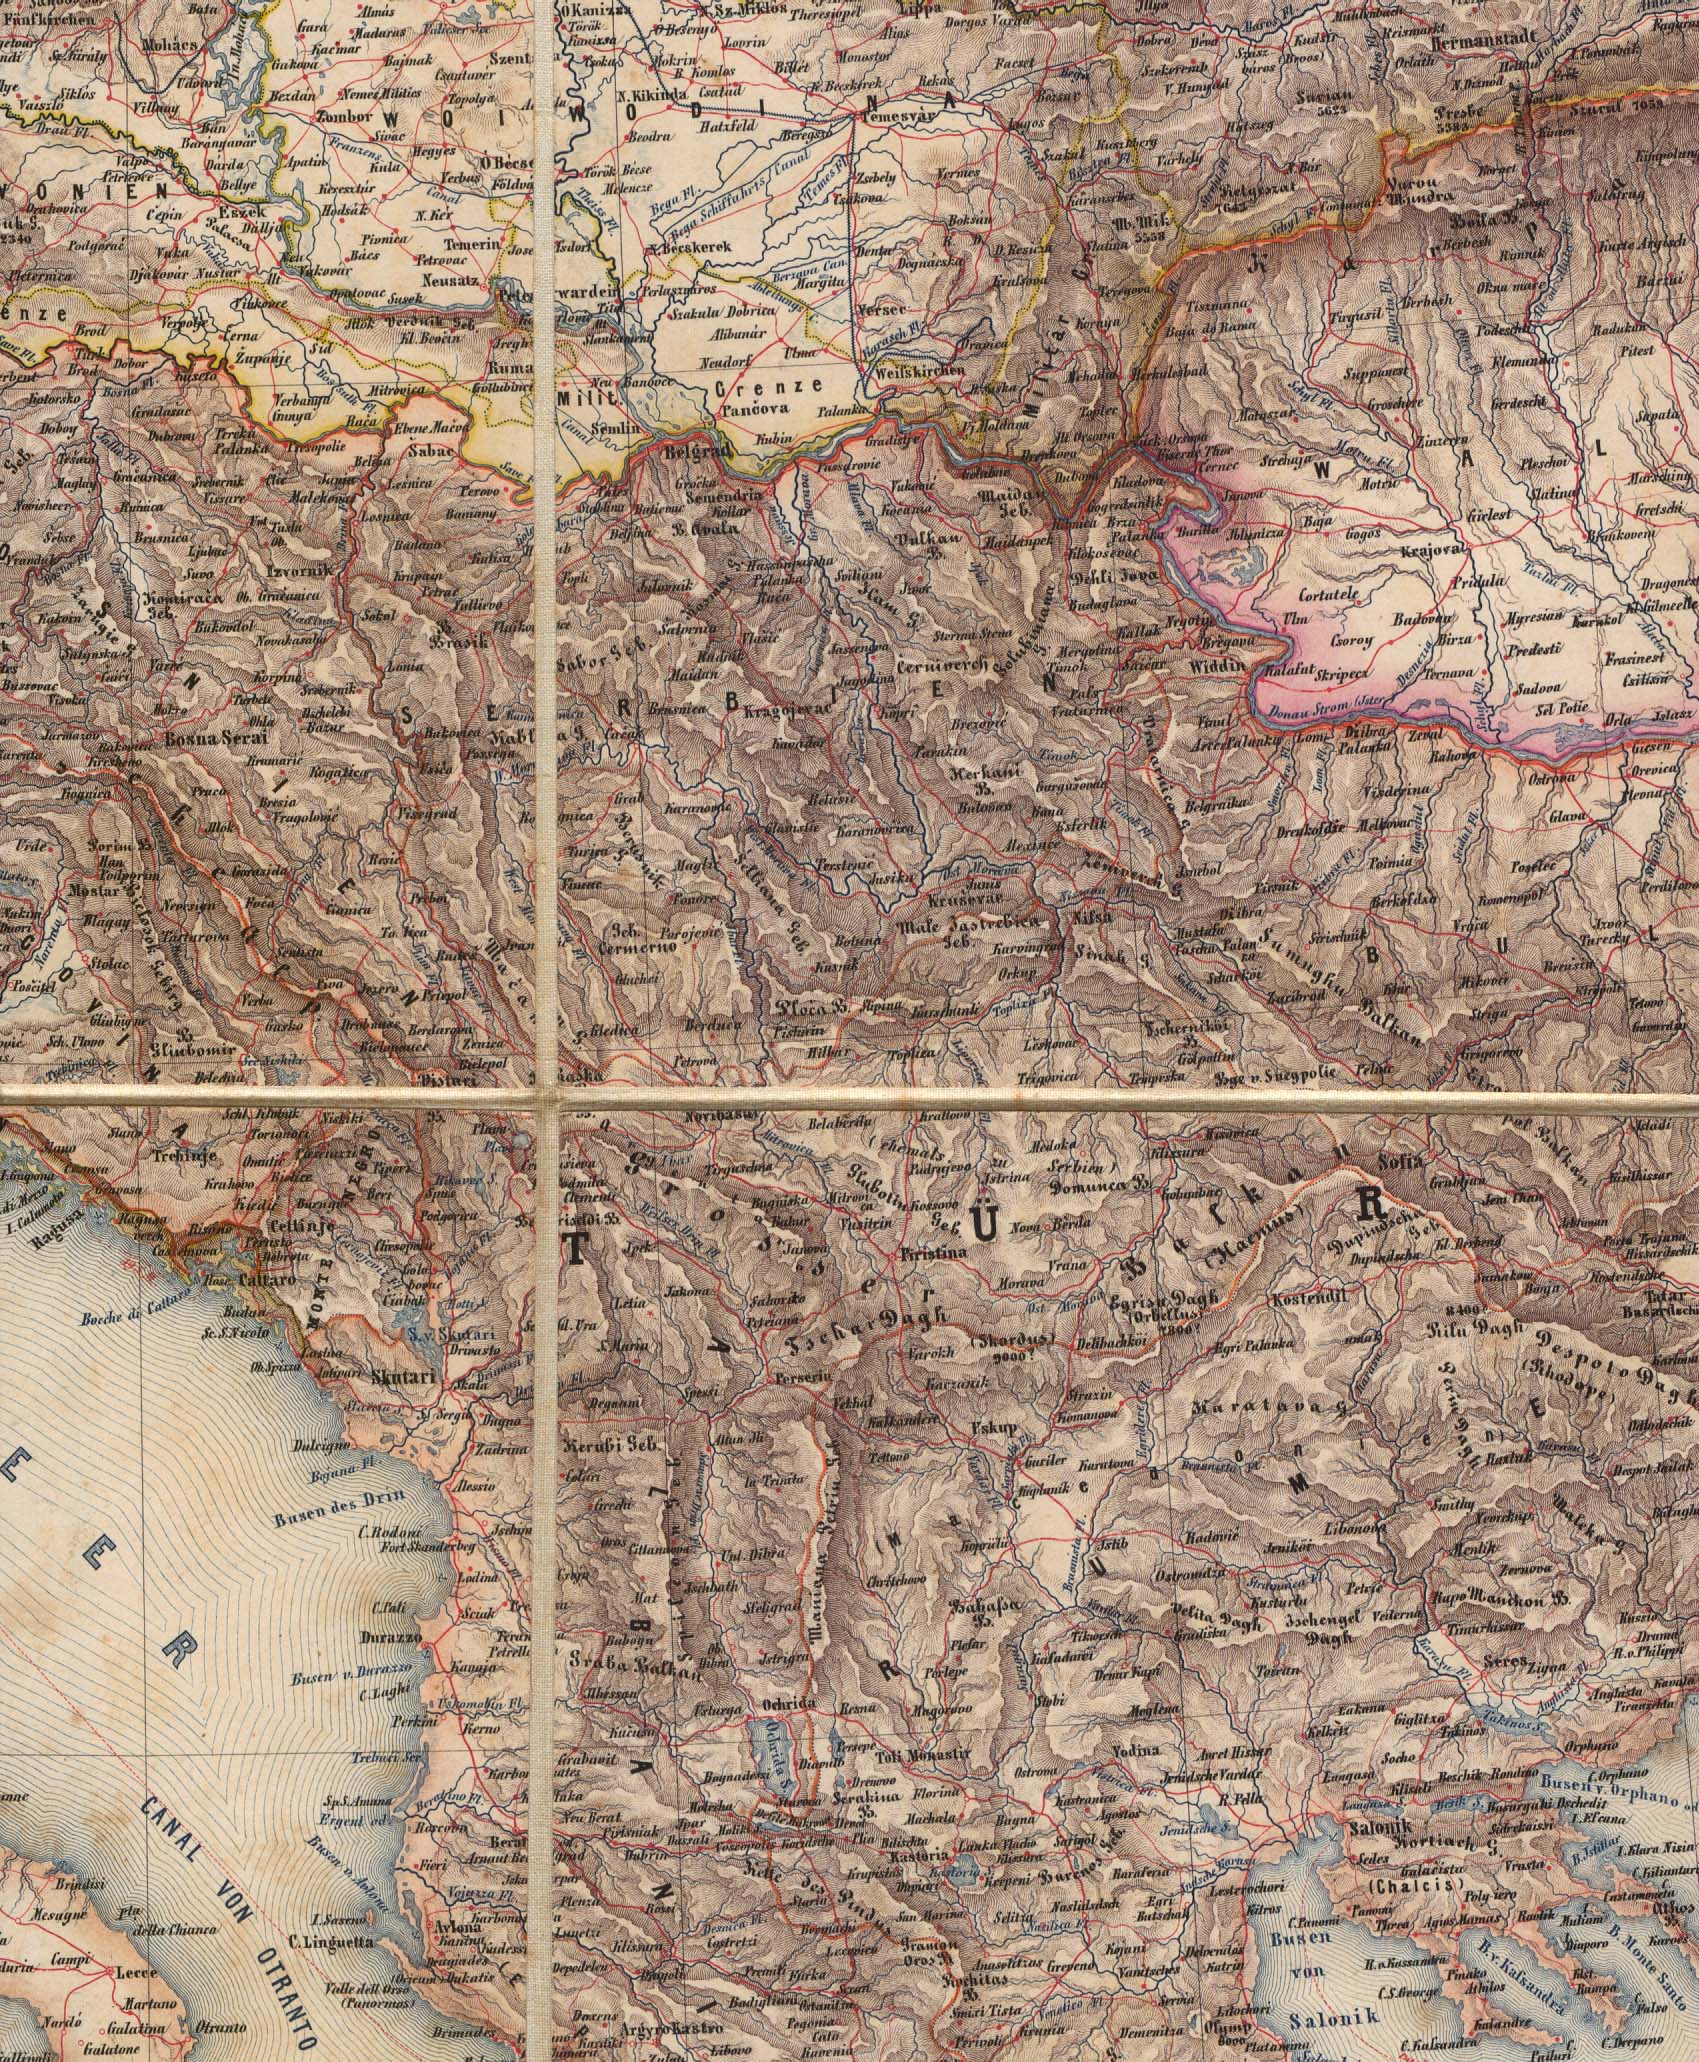 Historical Map of Balkan. Balkans 1859 (888K)
Portion of 'General-Karte von Europa' by J. Scheda, 1859.
